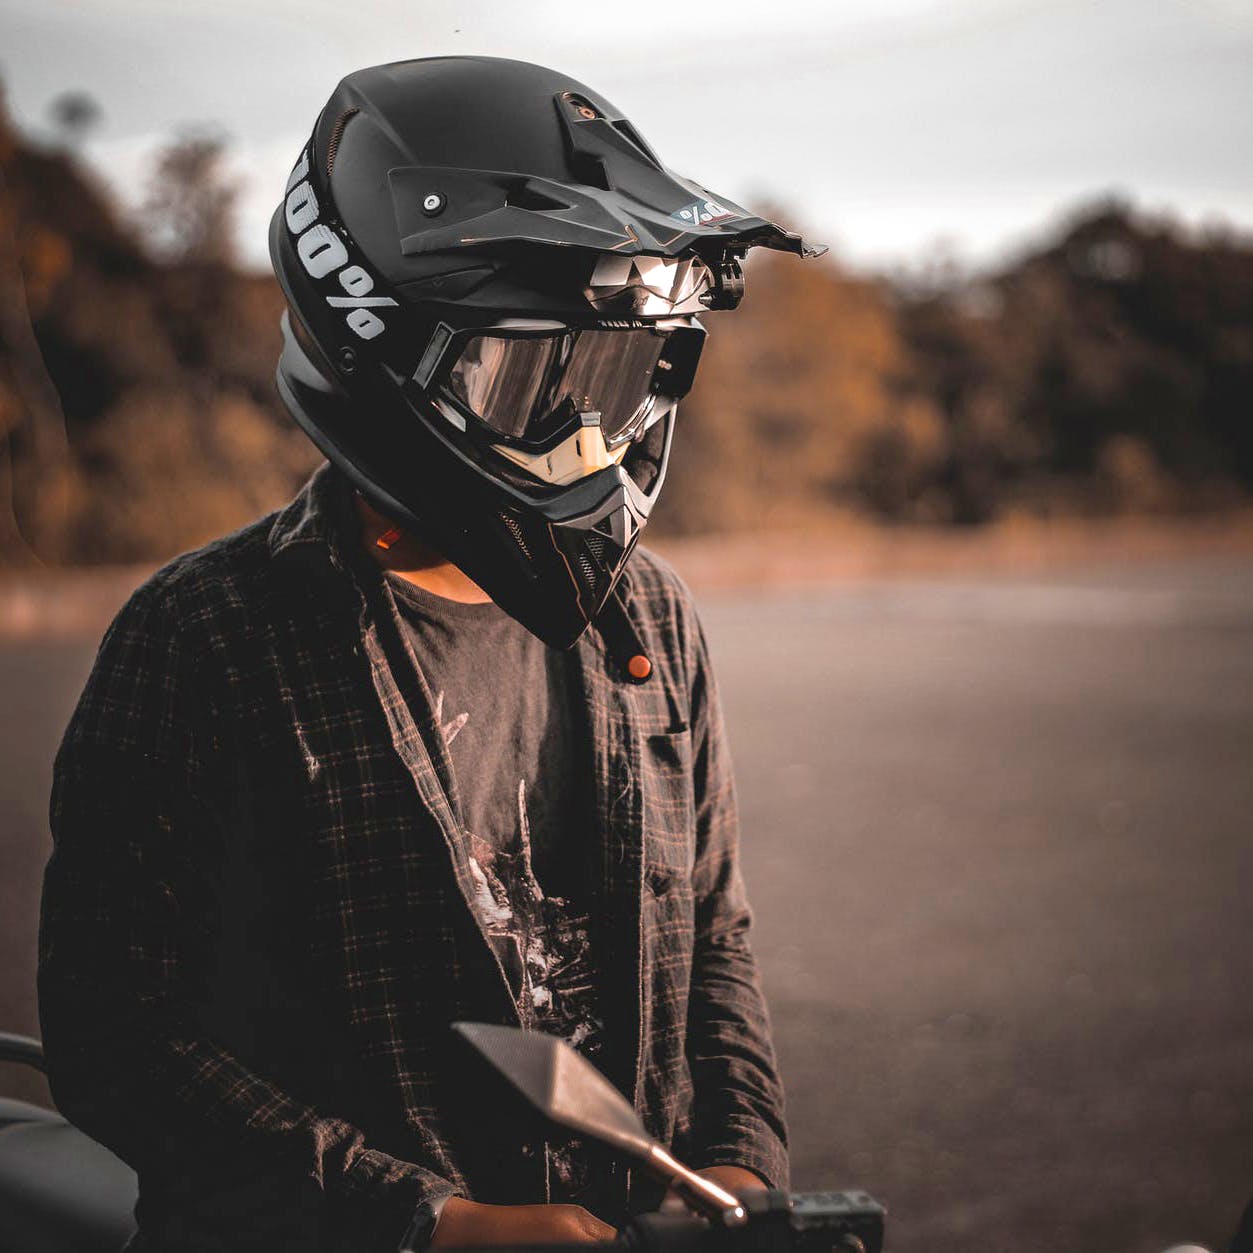 Helmet,Motorcycle helmet,Personal protective equipment,Sports gear,Headgear,Vehicle,Motorcycle,Outerwear,Sports equipment